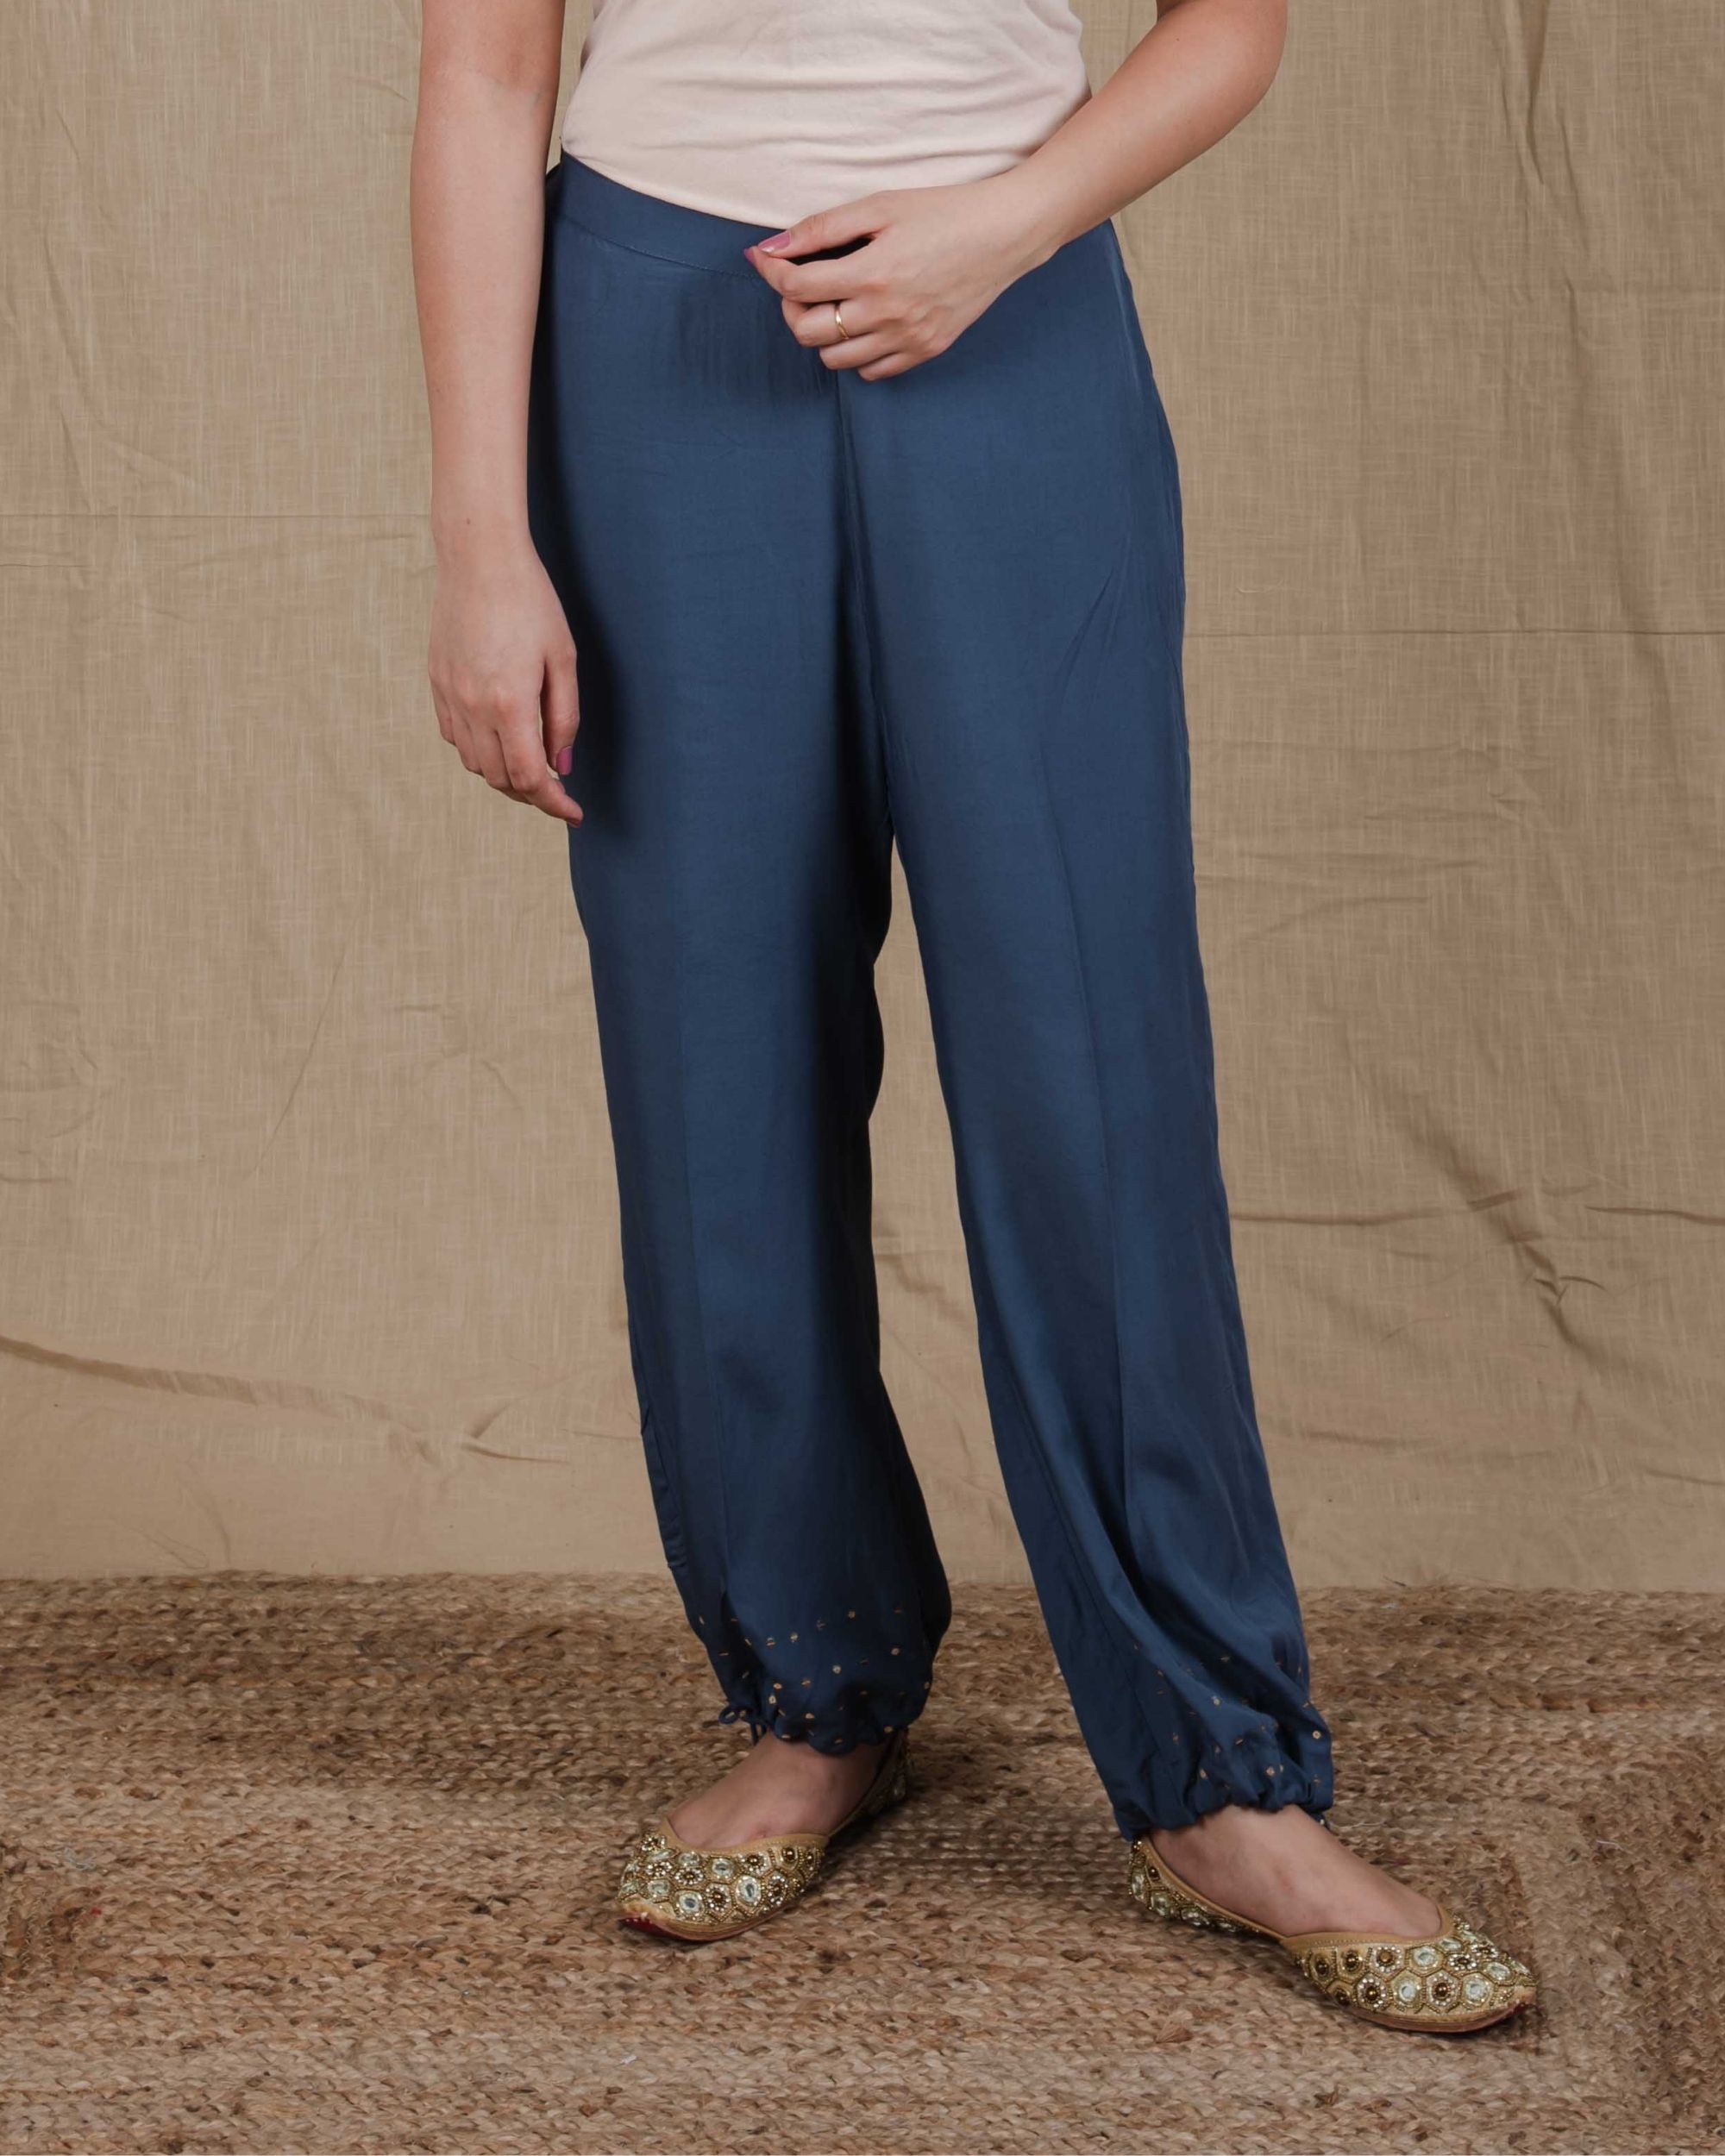 Discover more than 76 blue sequin pants super hot